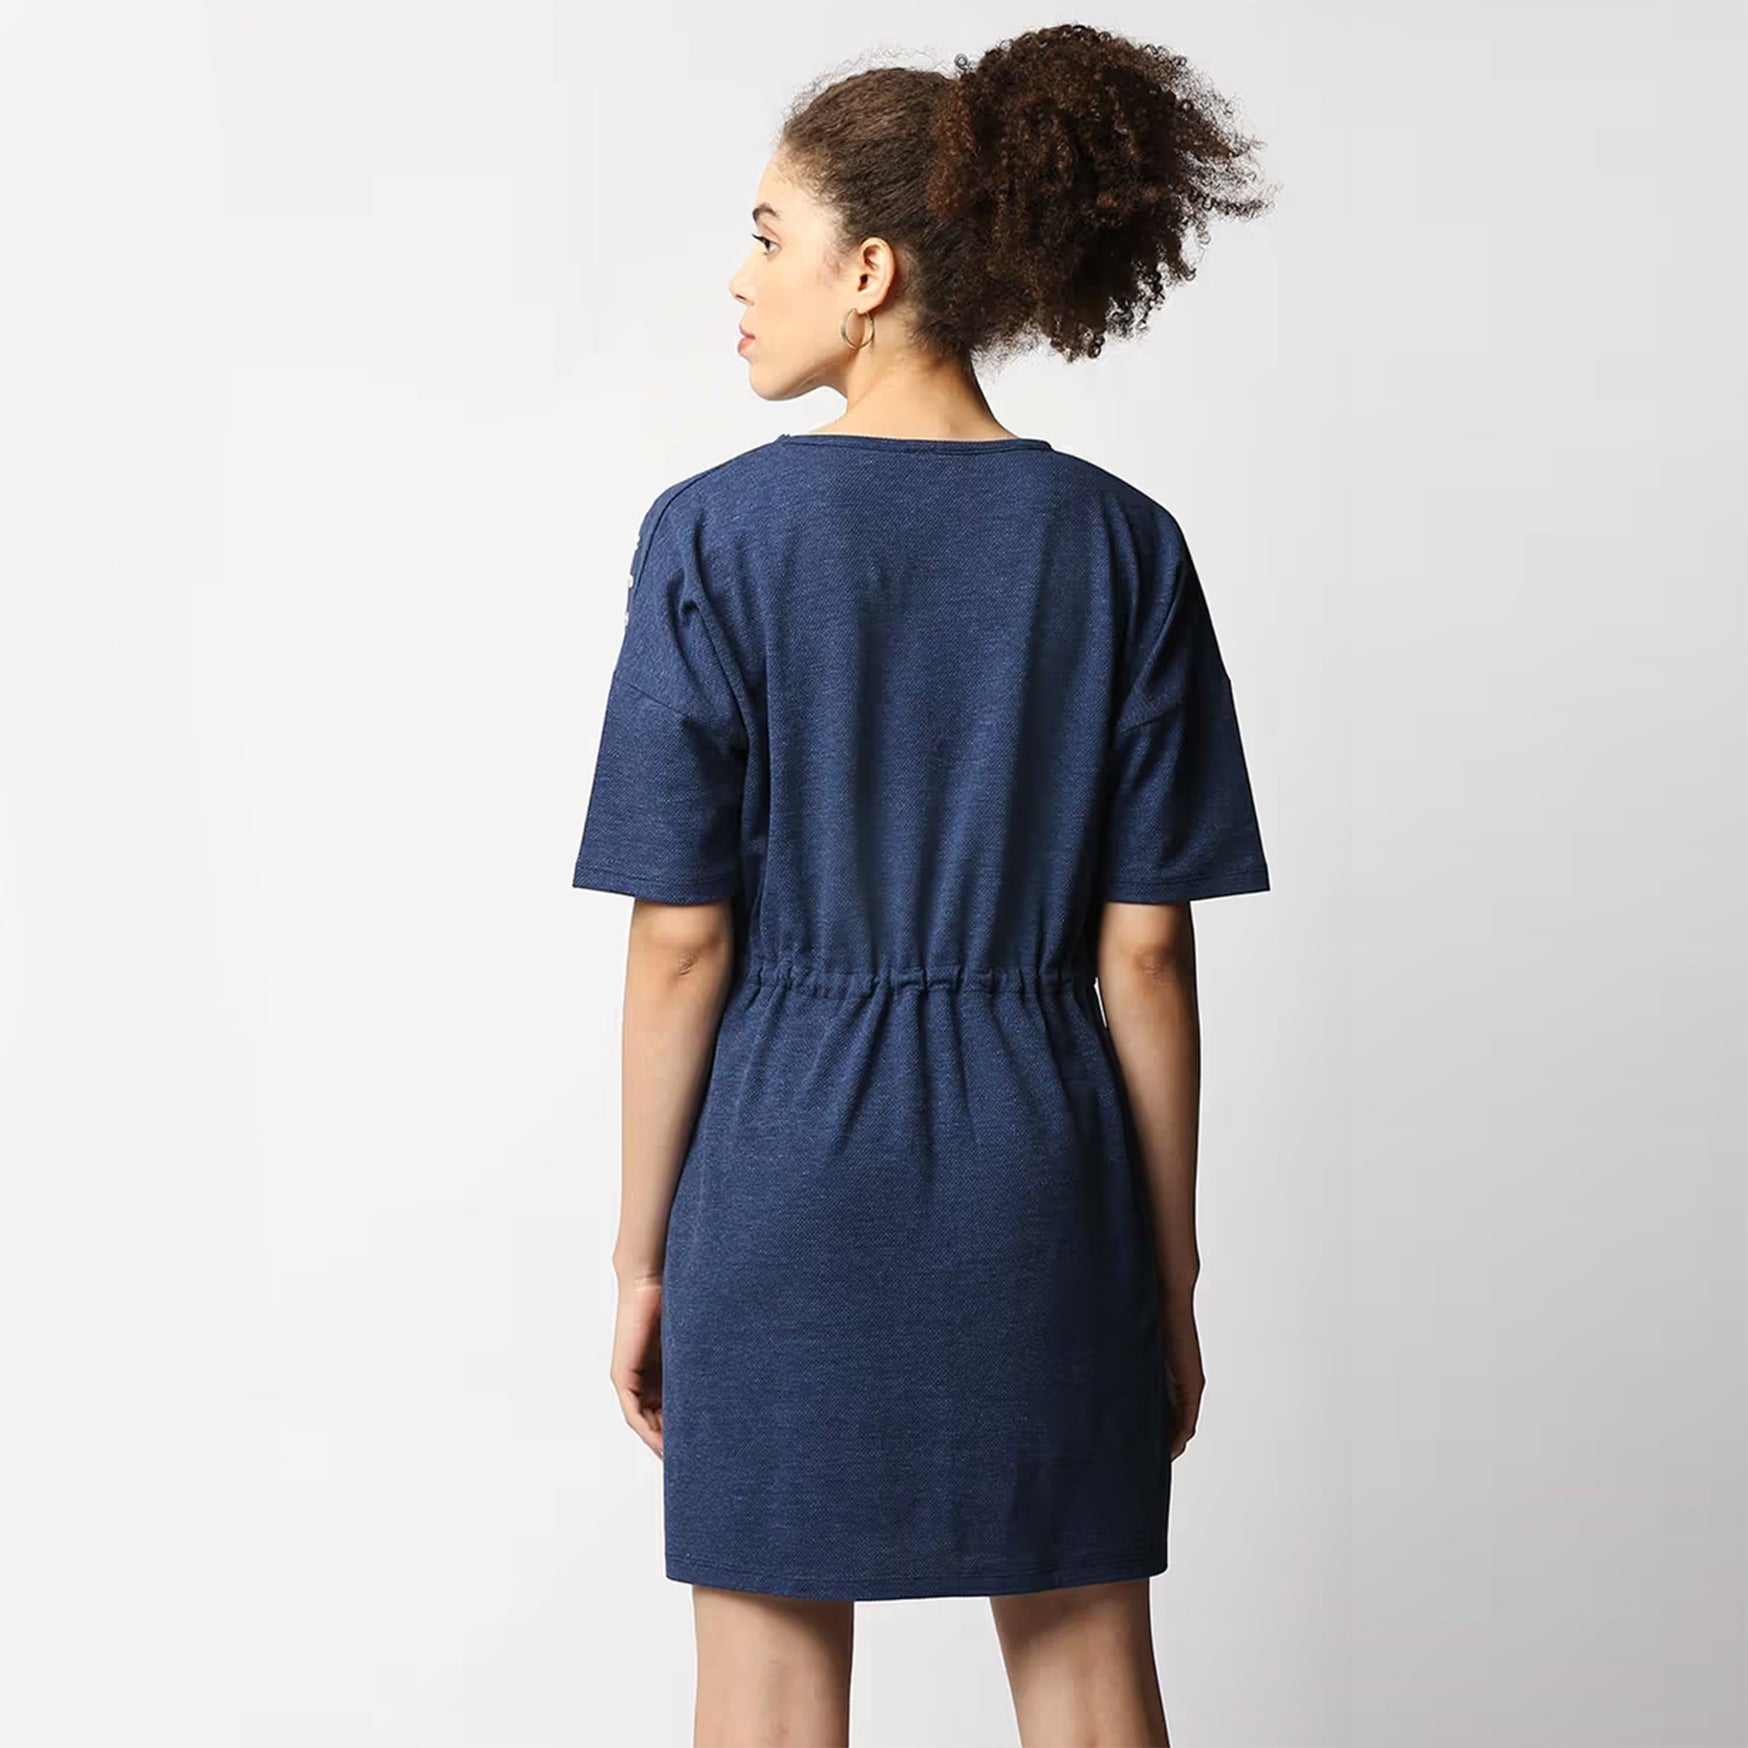 Blue Self Design Jacquard Boxy Fit Dress (S)